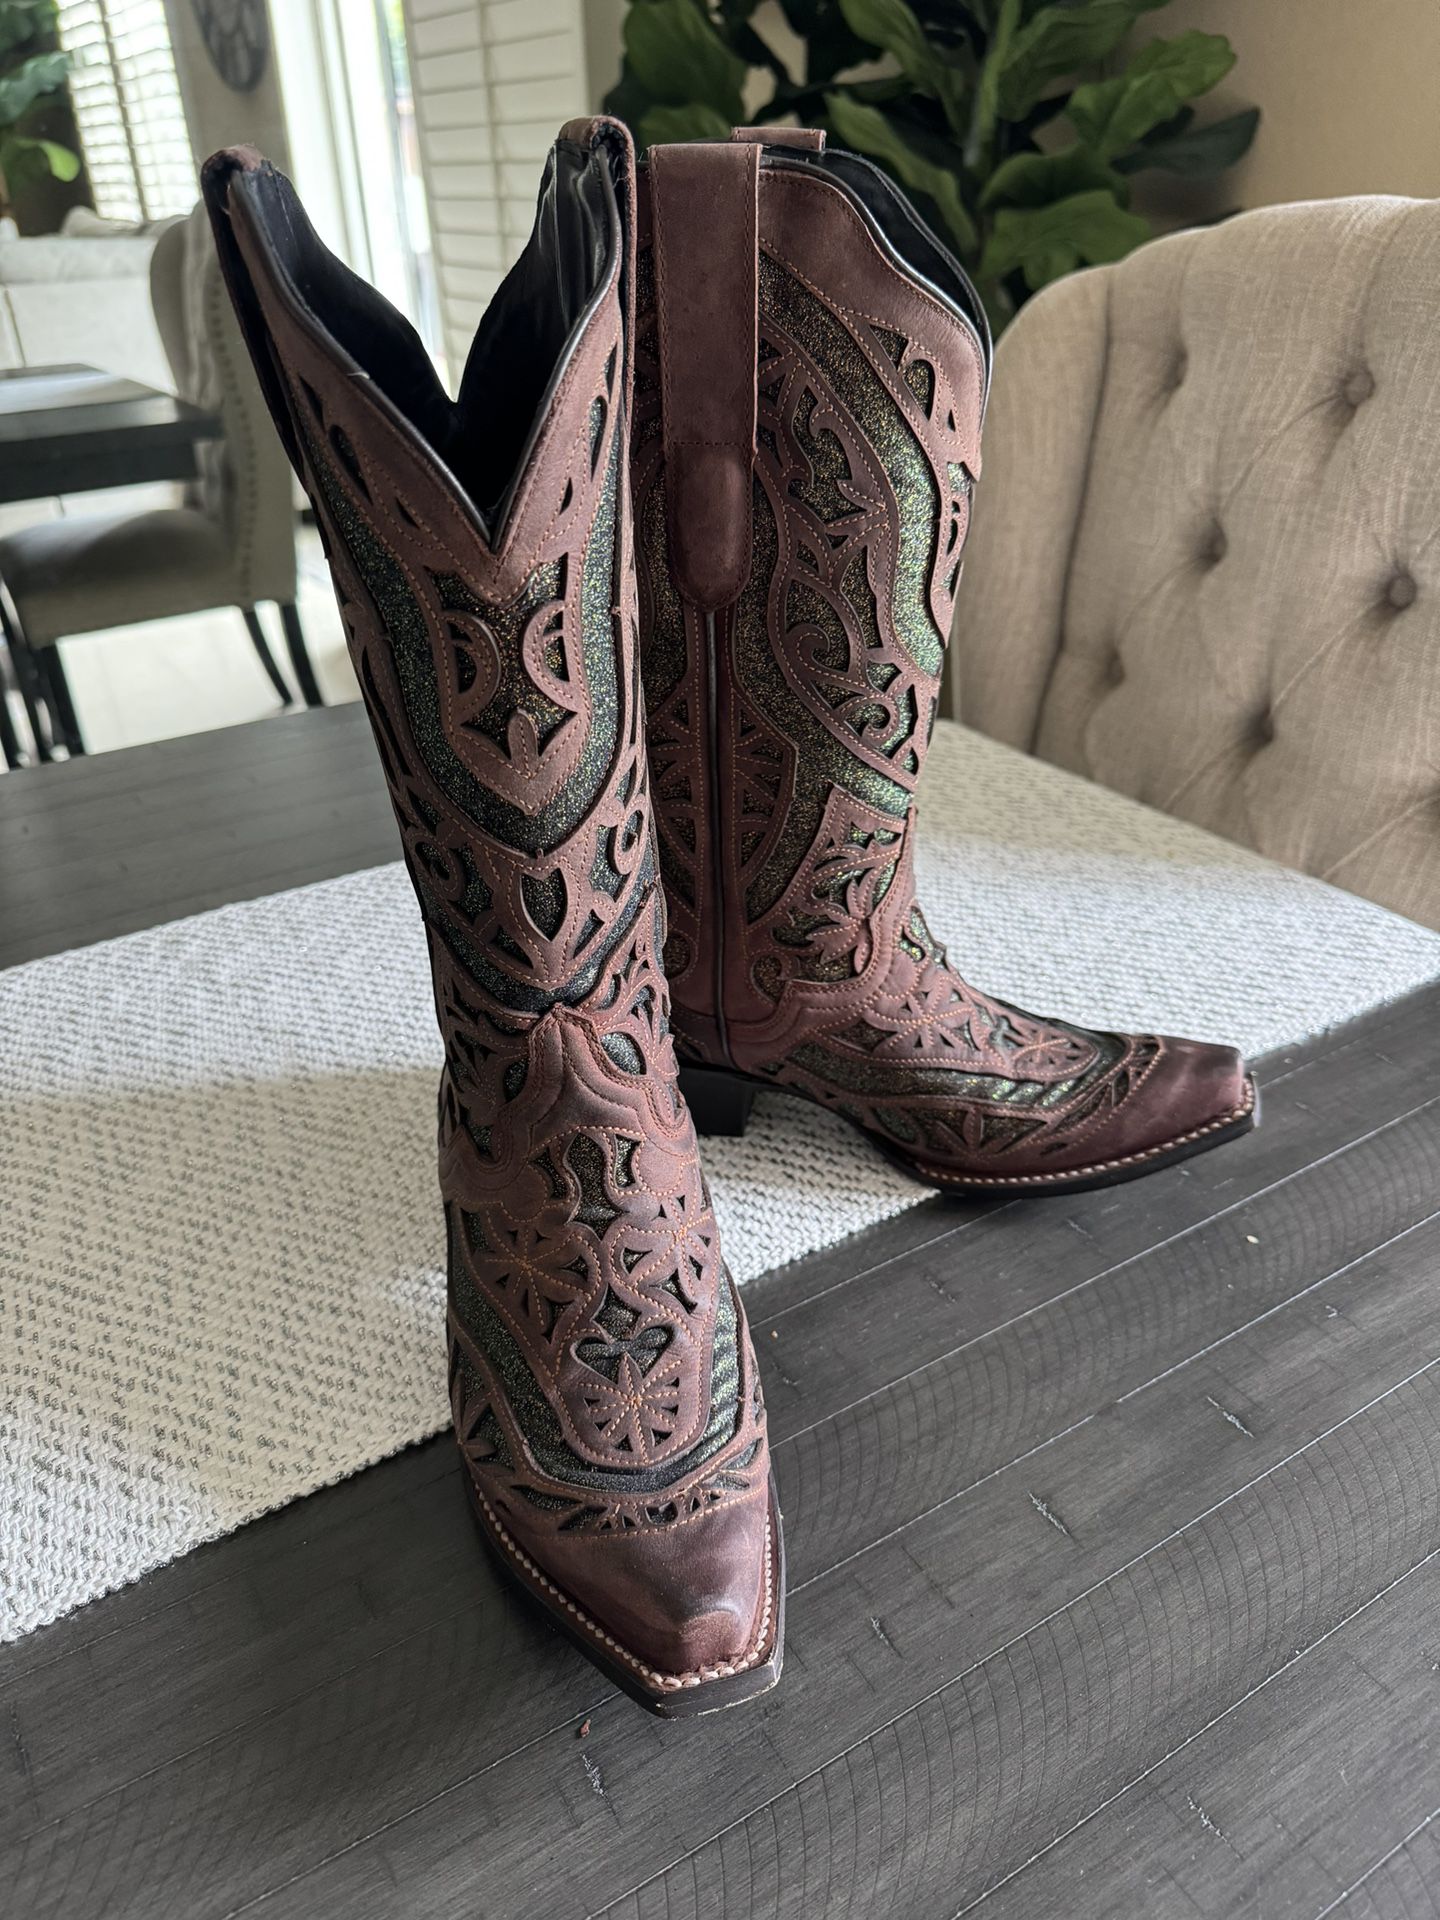 Like New Women’s Cowboy Boots Sz 8 